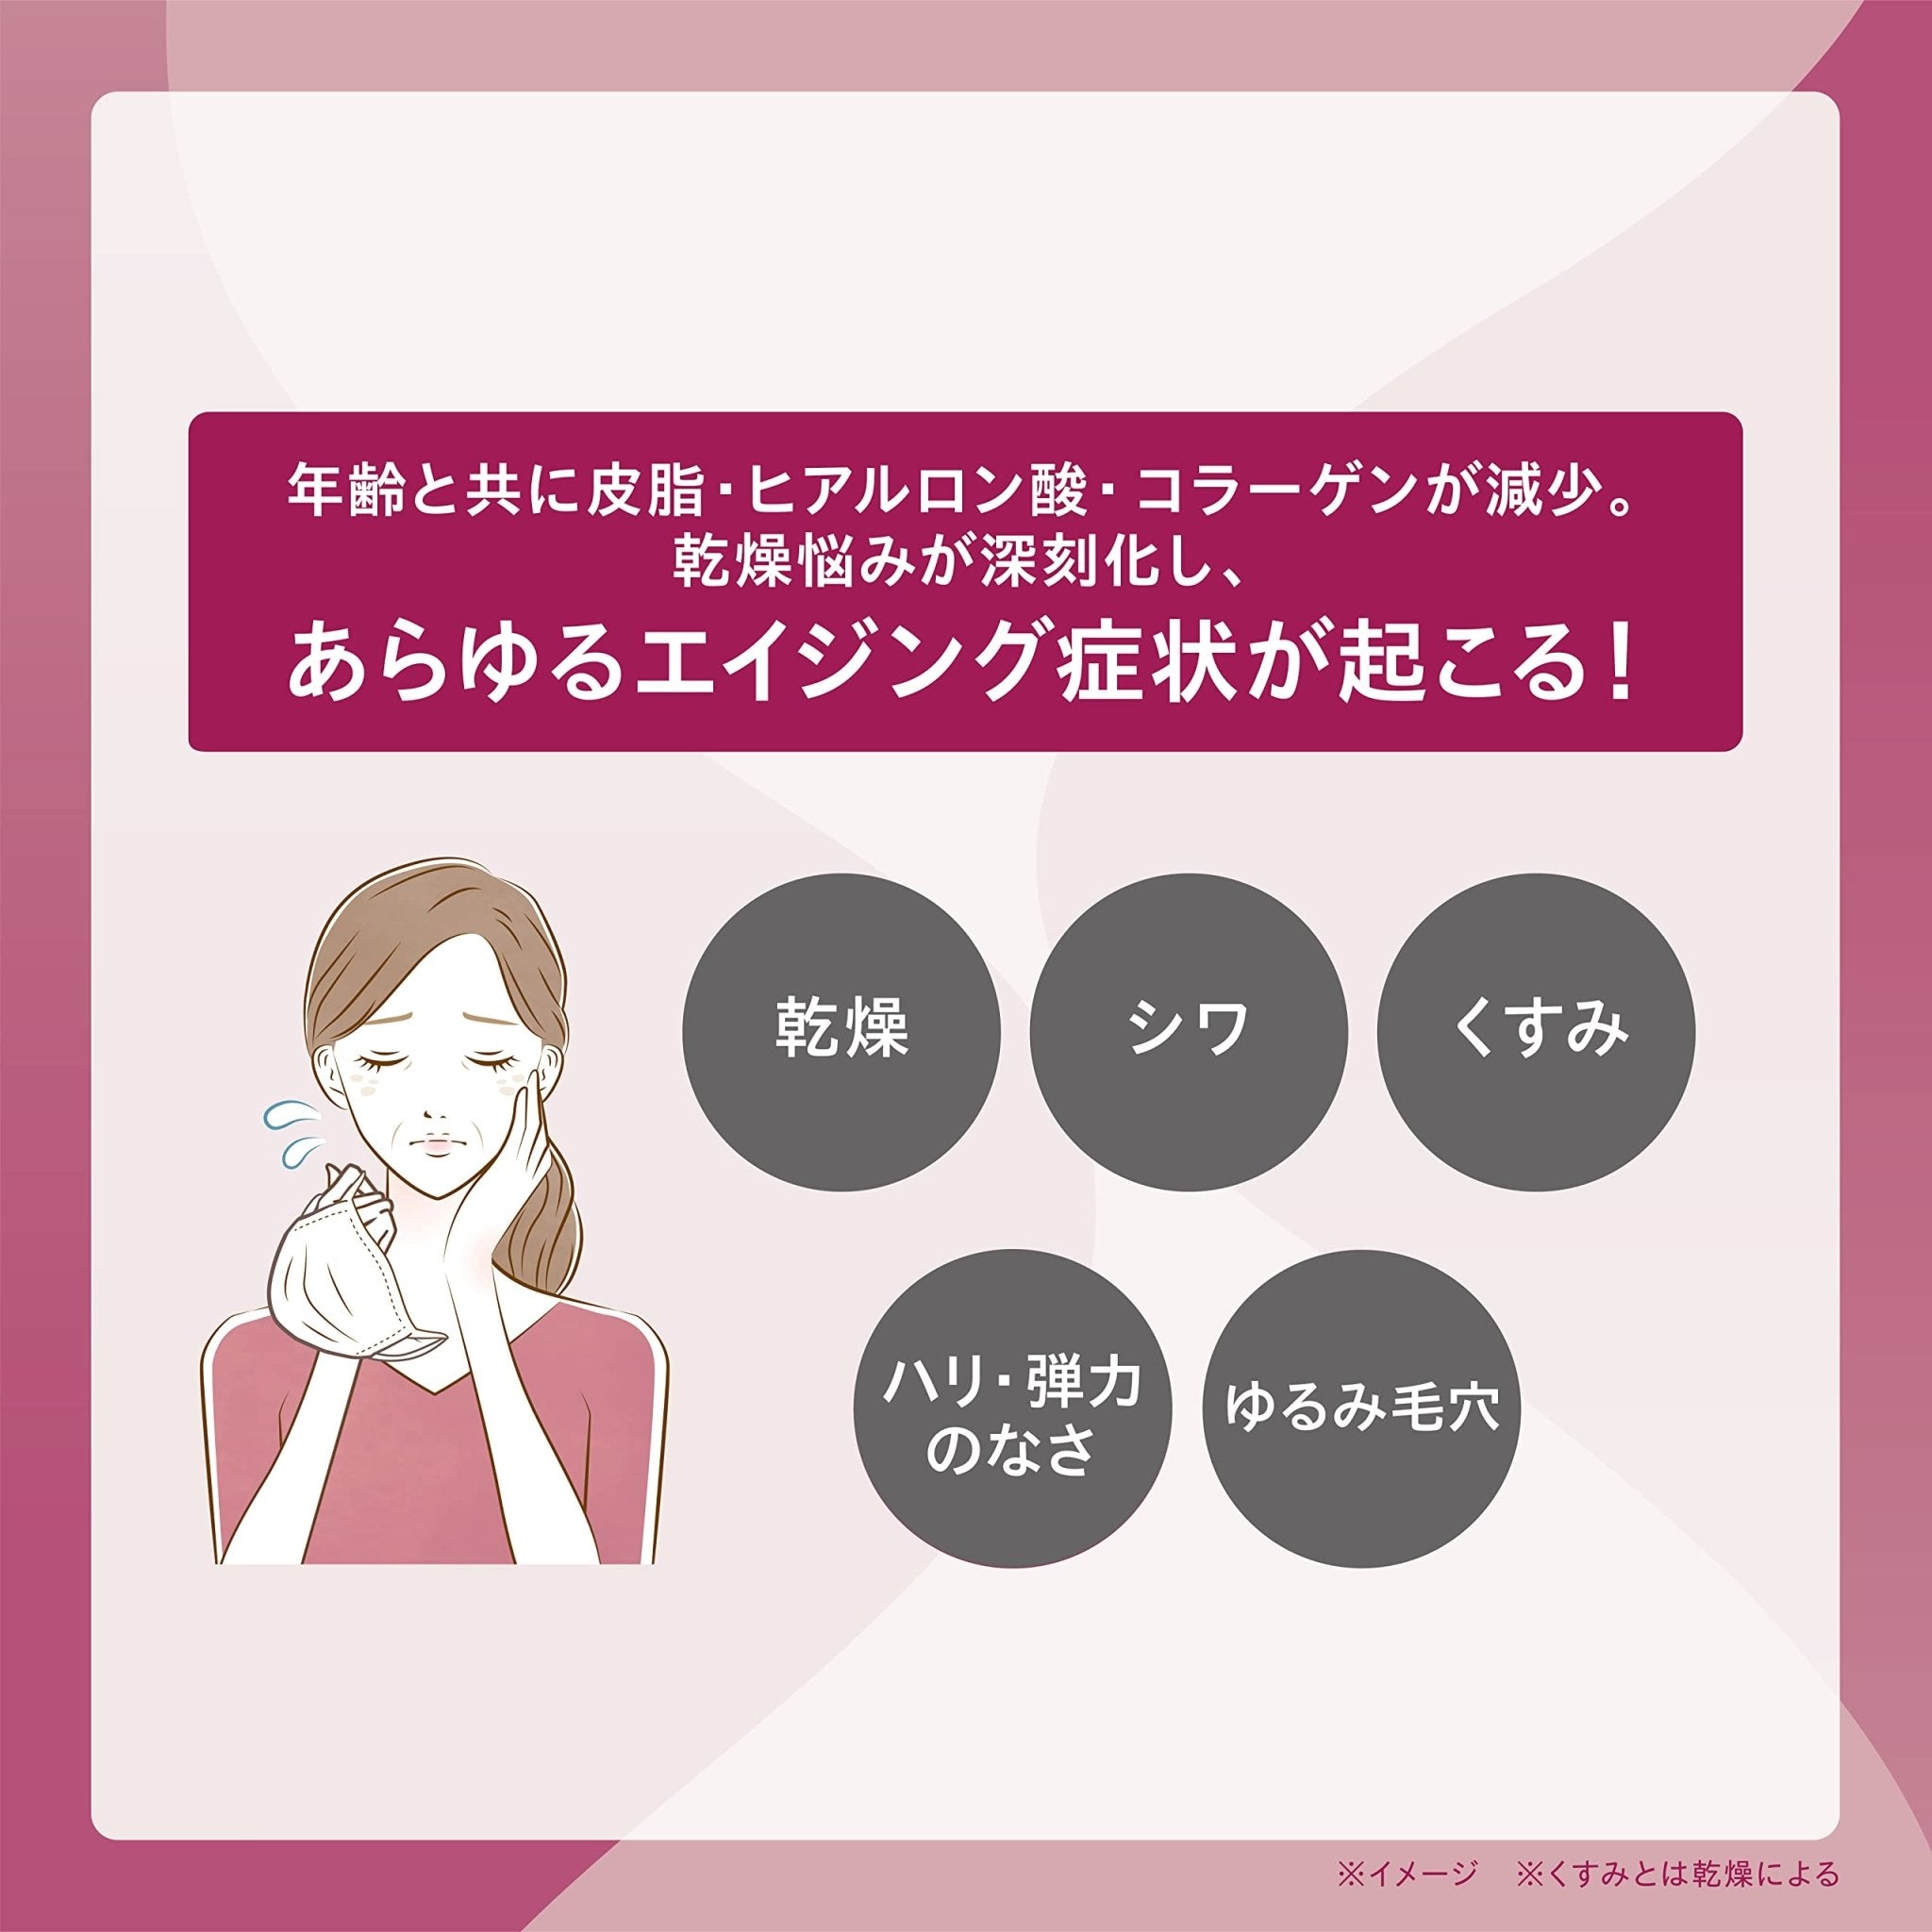 D - Up Eyelash Fixer Ex553 False Eyelash Adhesive Black Type Japan - YOYO JAPAN